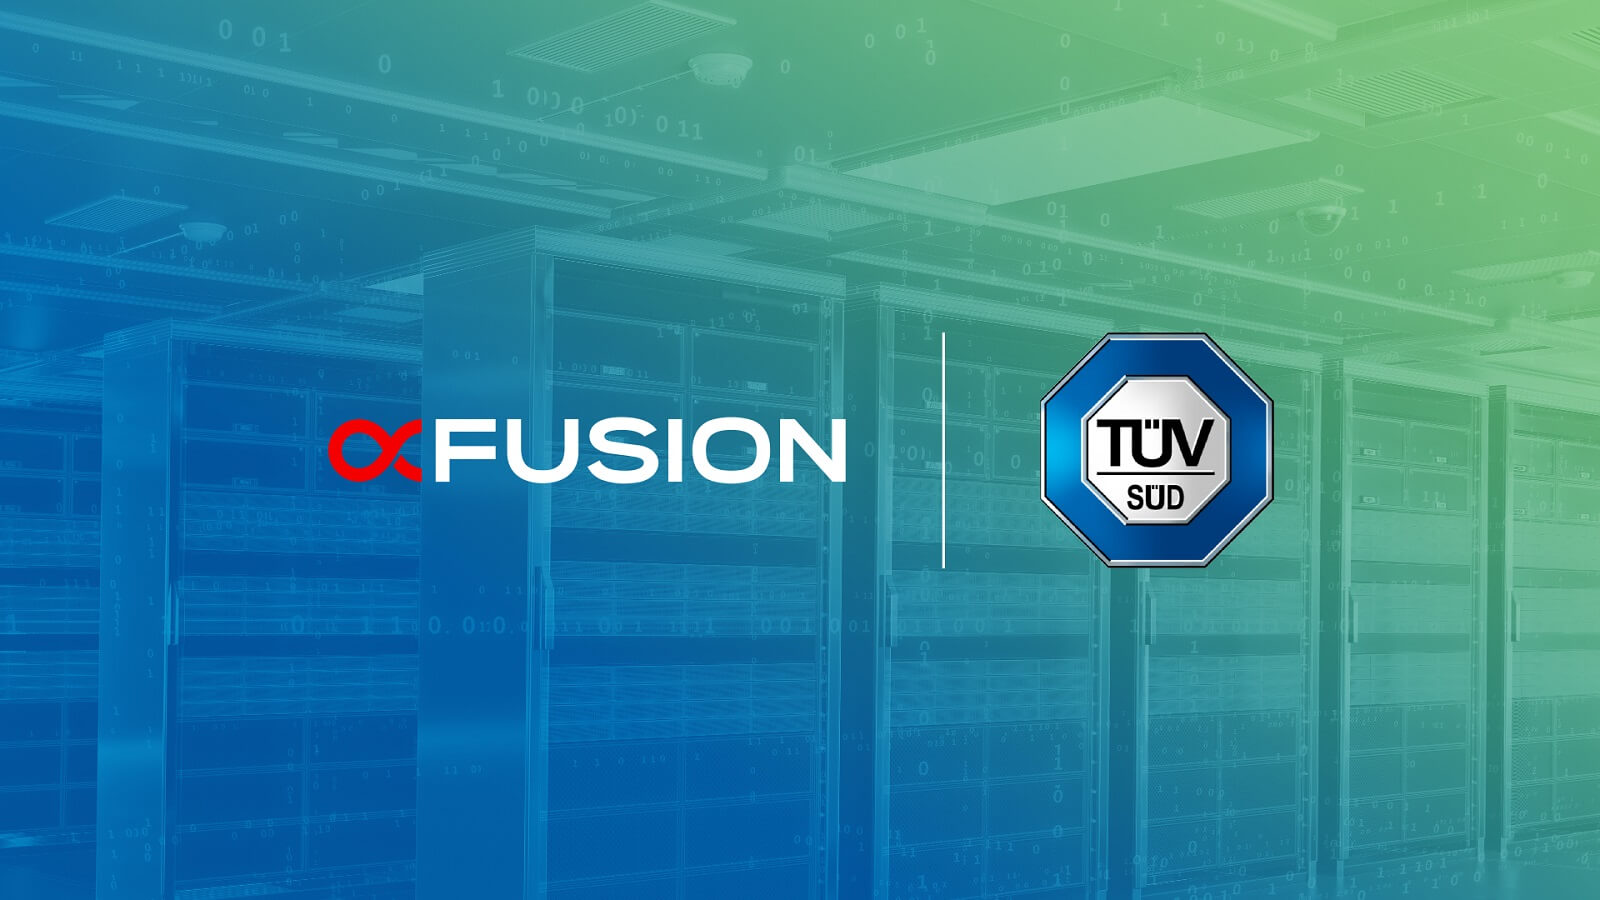 xFusion Receives TÜV SÜD Certification for Intelligent Data Center Server